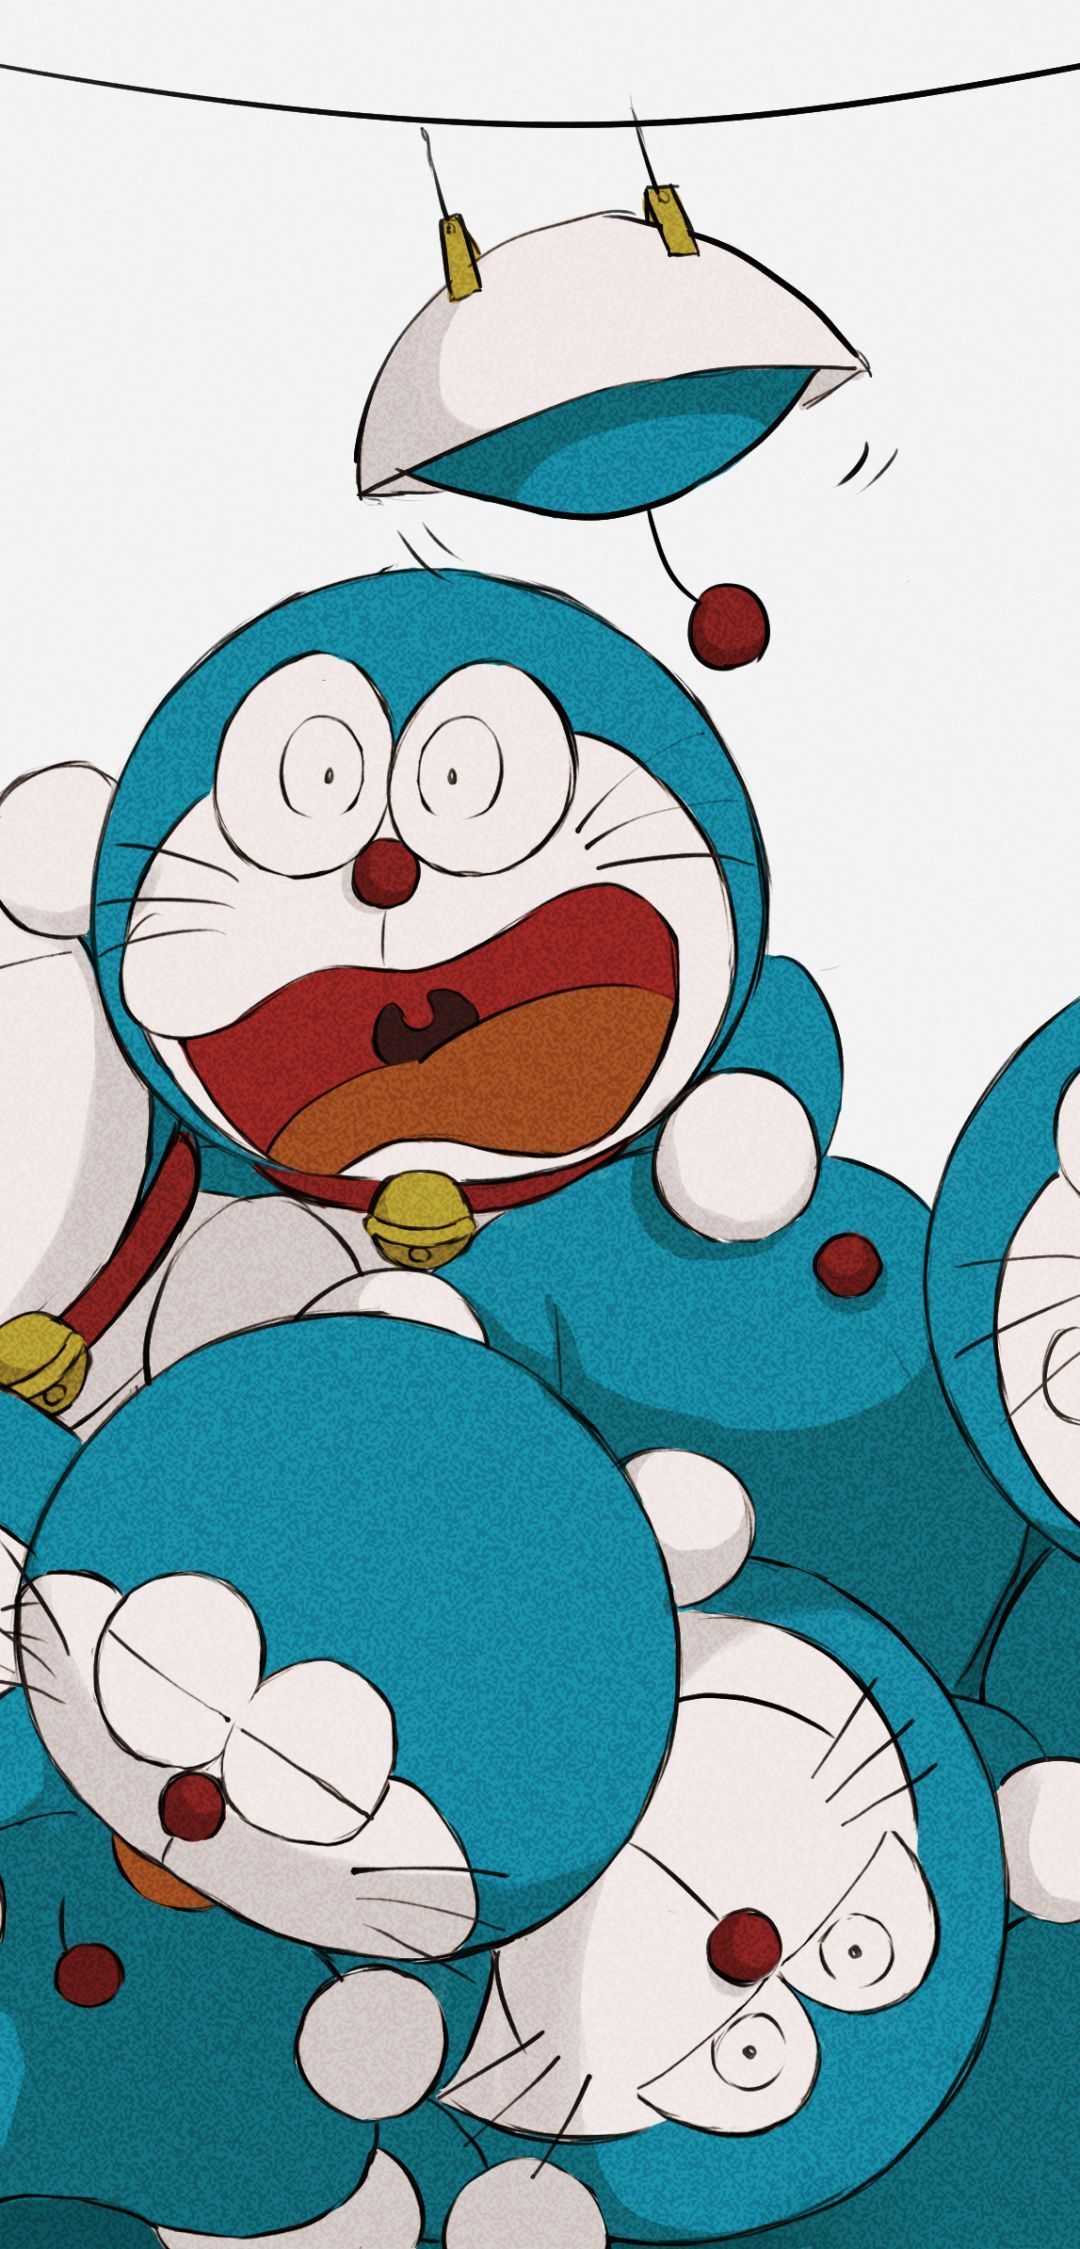 Anime Doraemon Phone Wallpaper by こた(まんぼう)